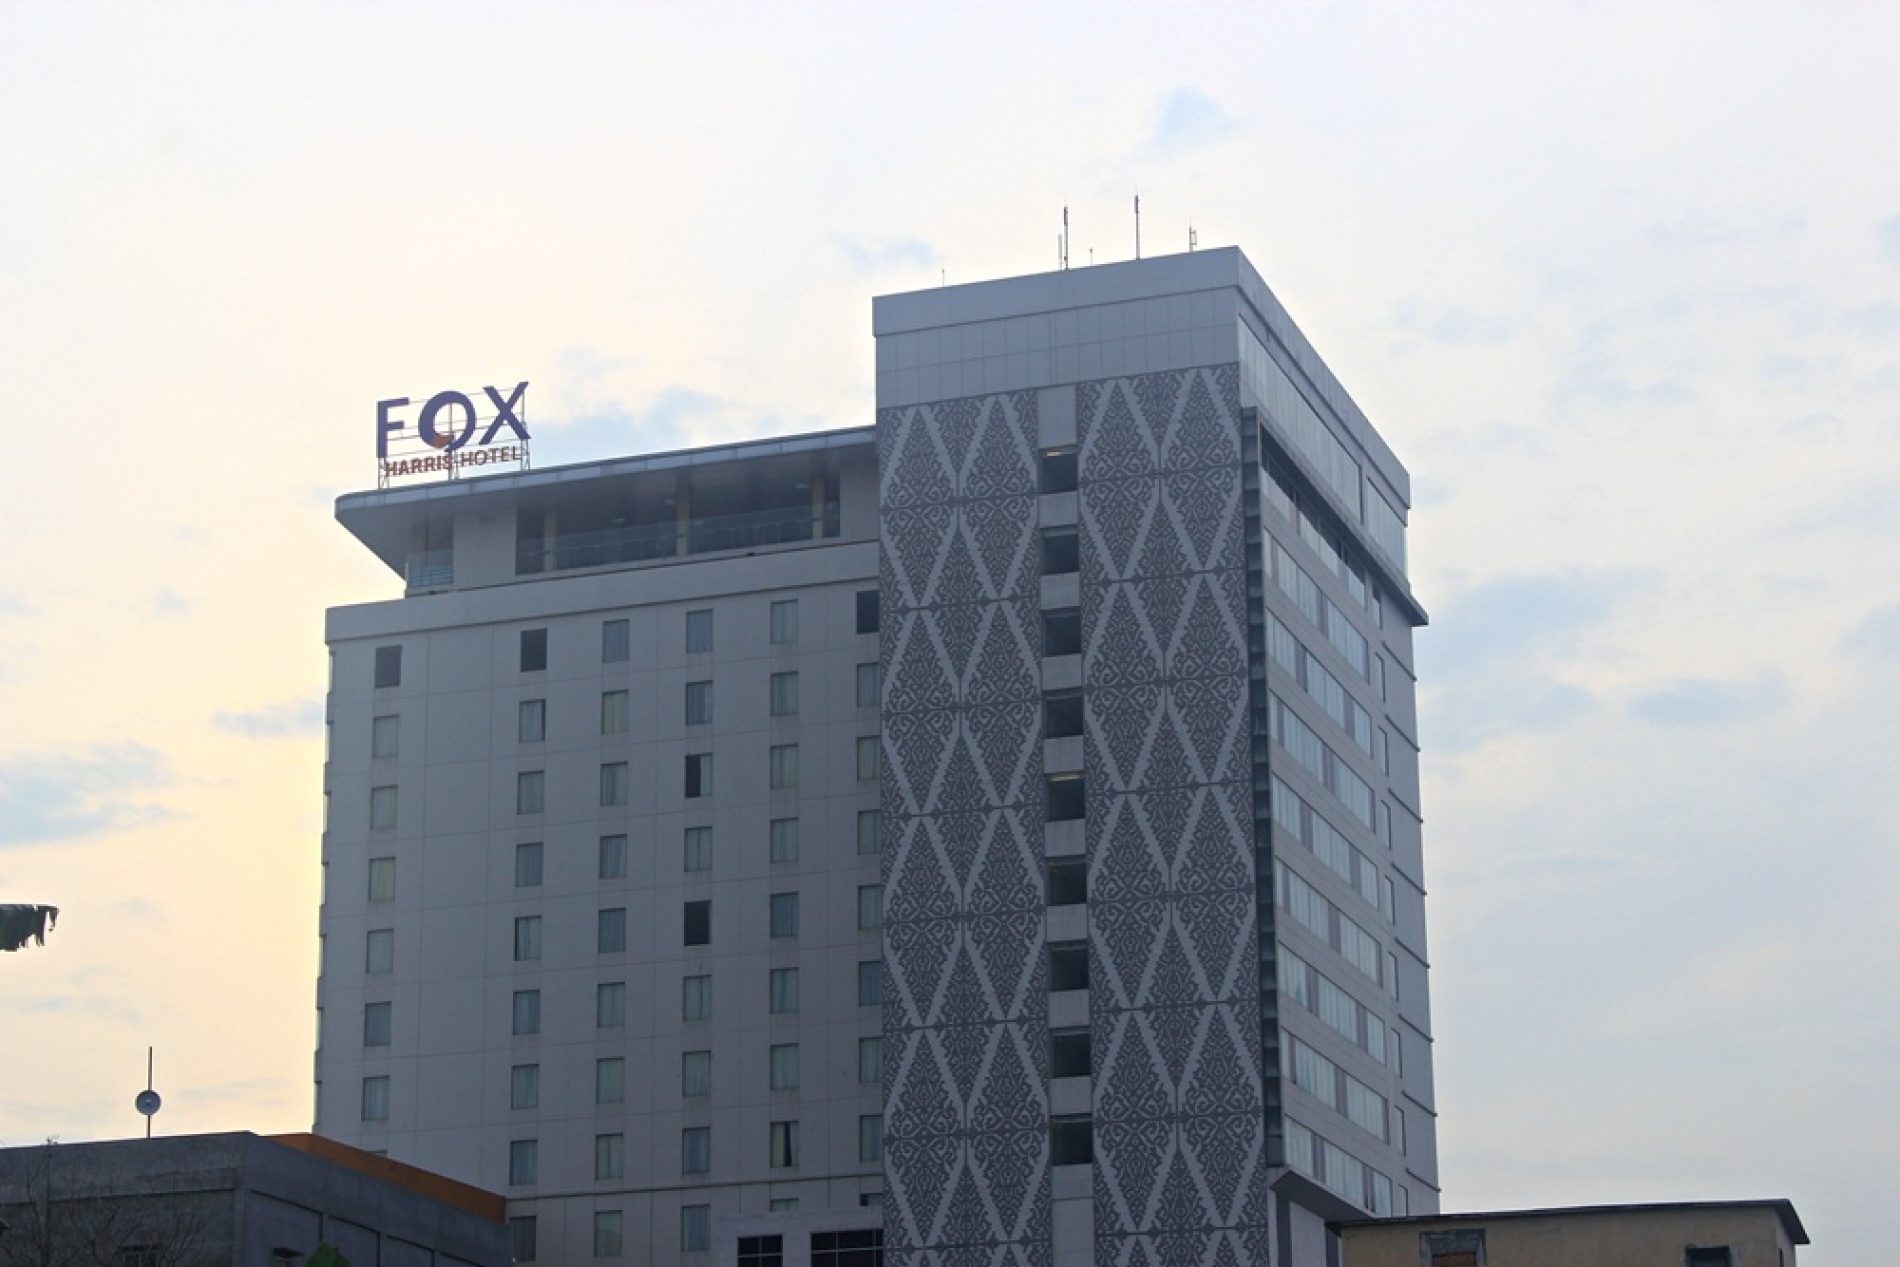 Staycation Fox Harris Hotel Pekanbaru: Tempat Menginap Paling Asyik di Kota Bertuah